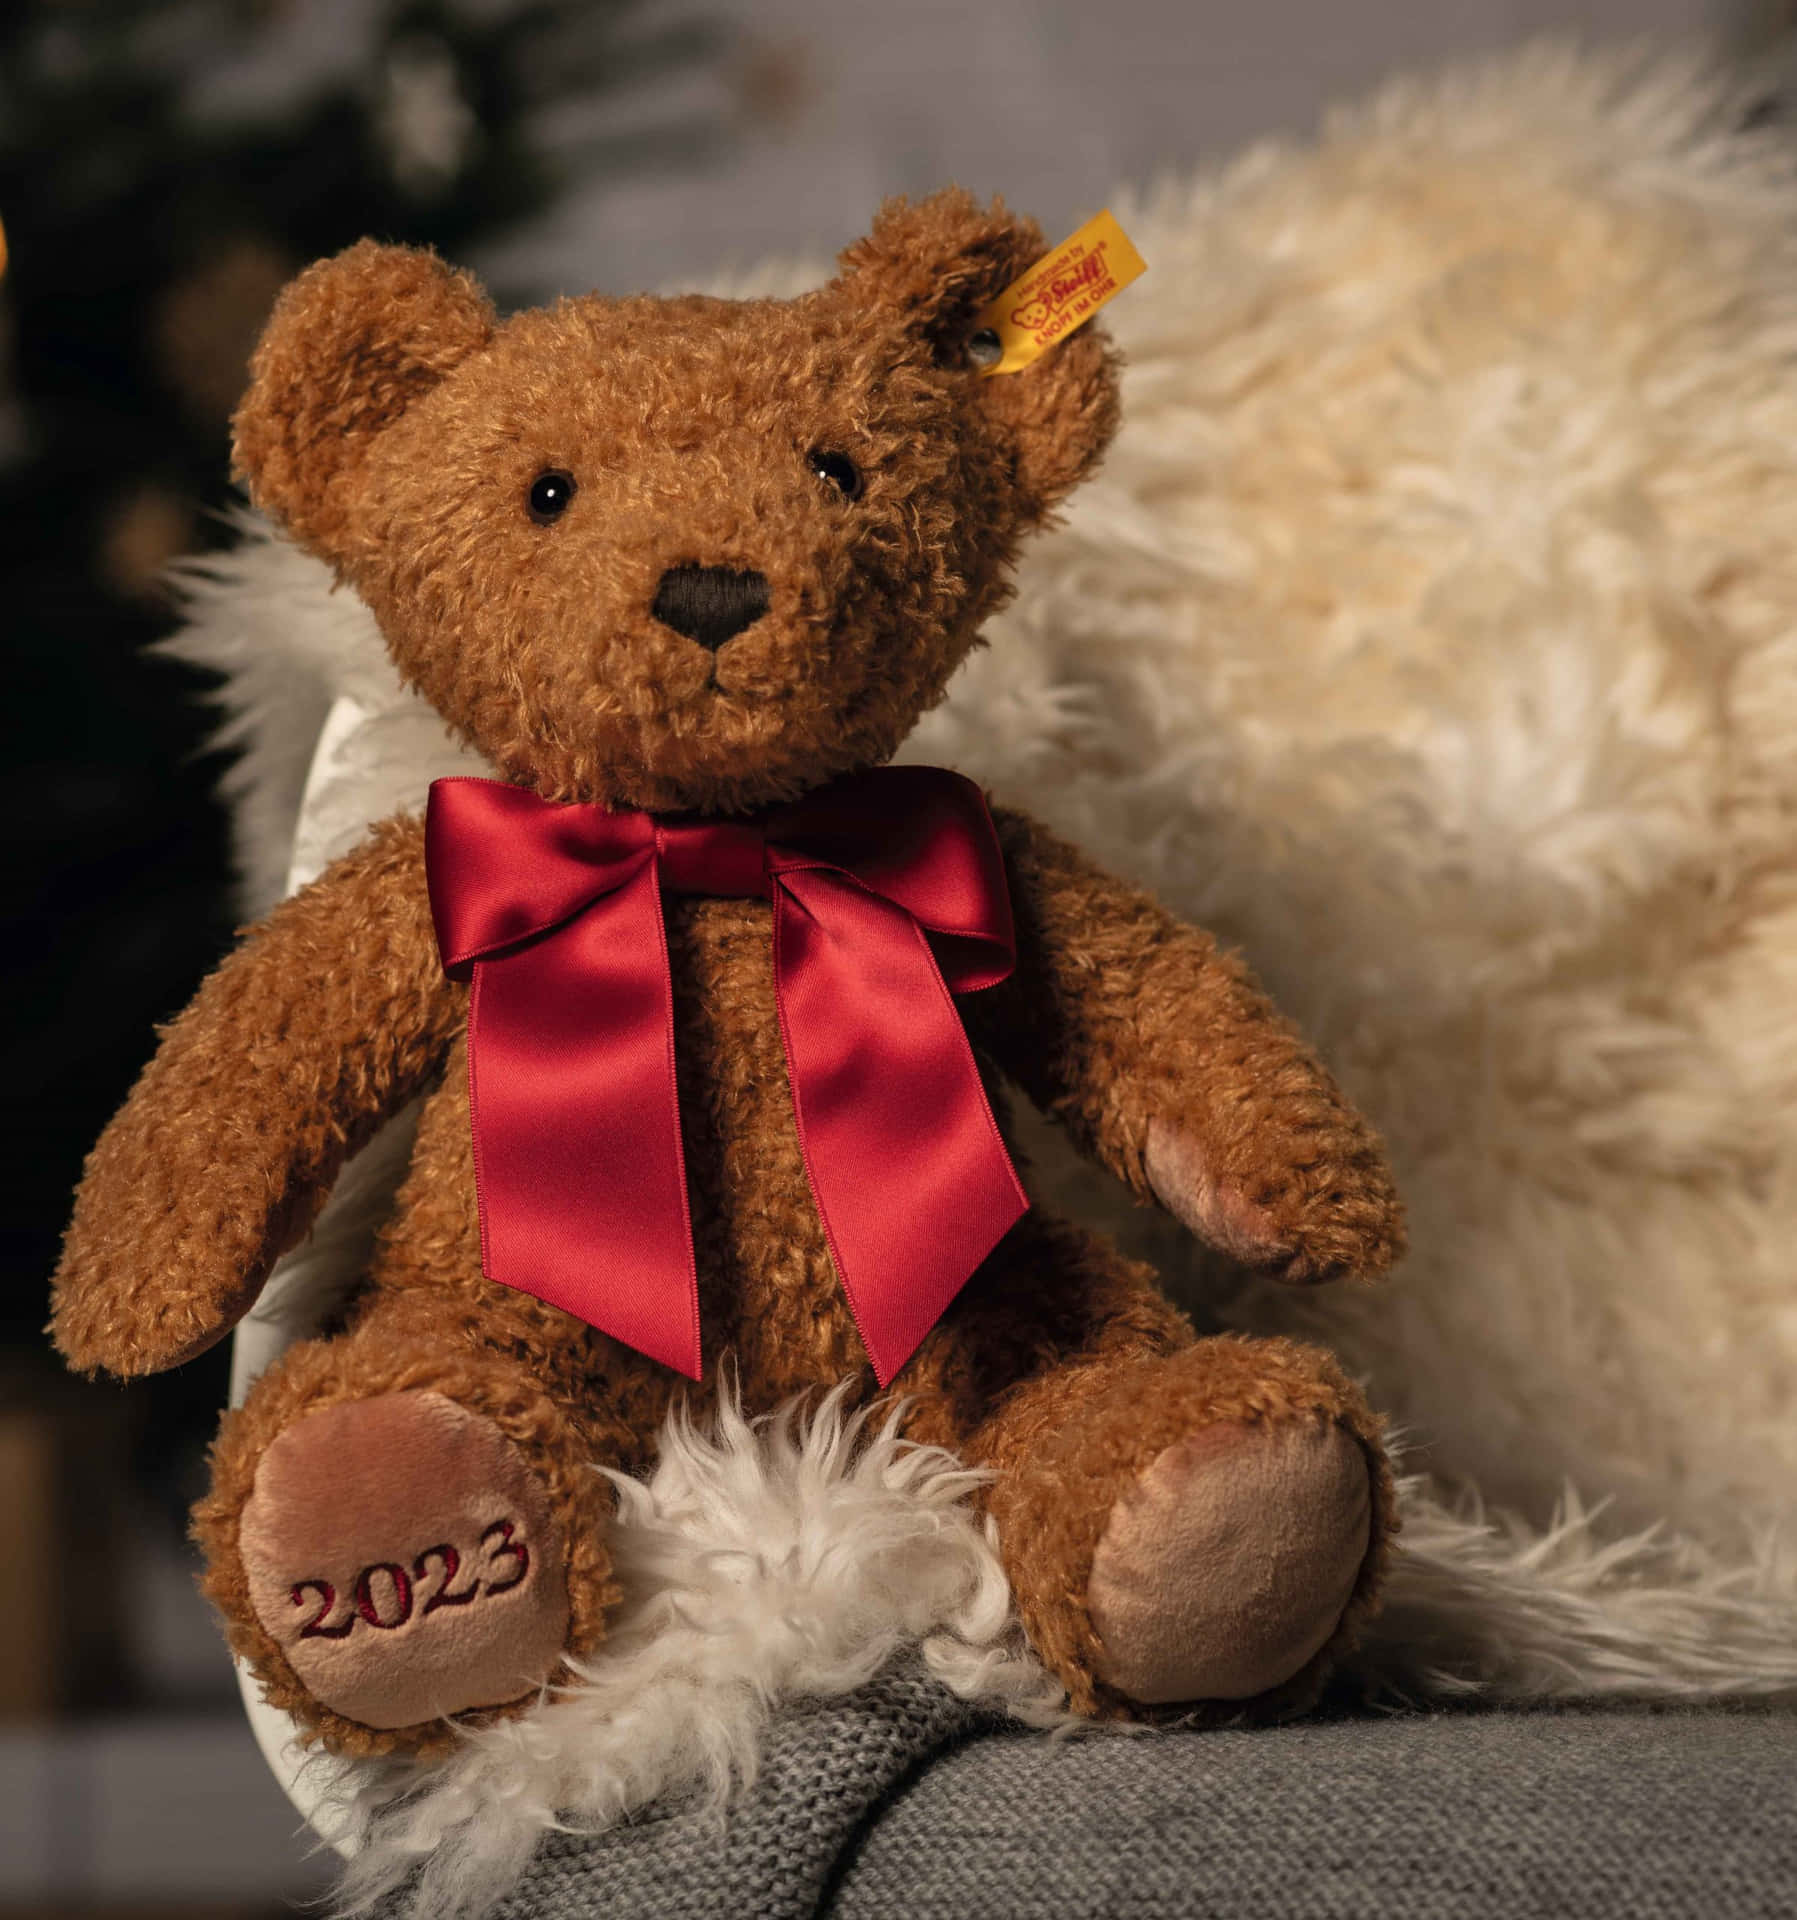 A Teddy Bear With A Red Bow